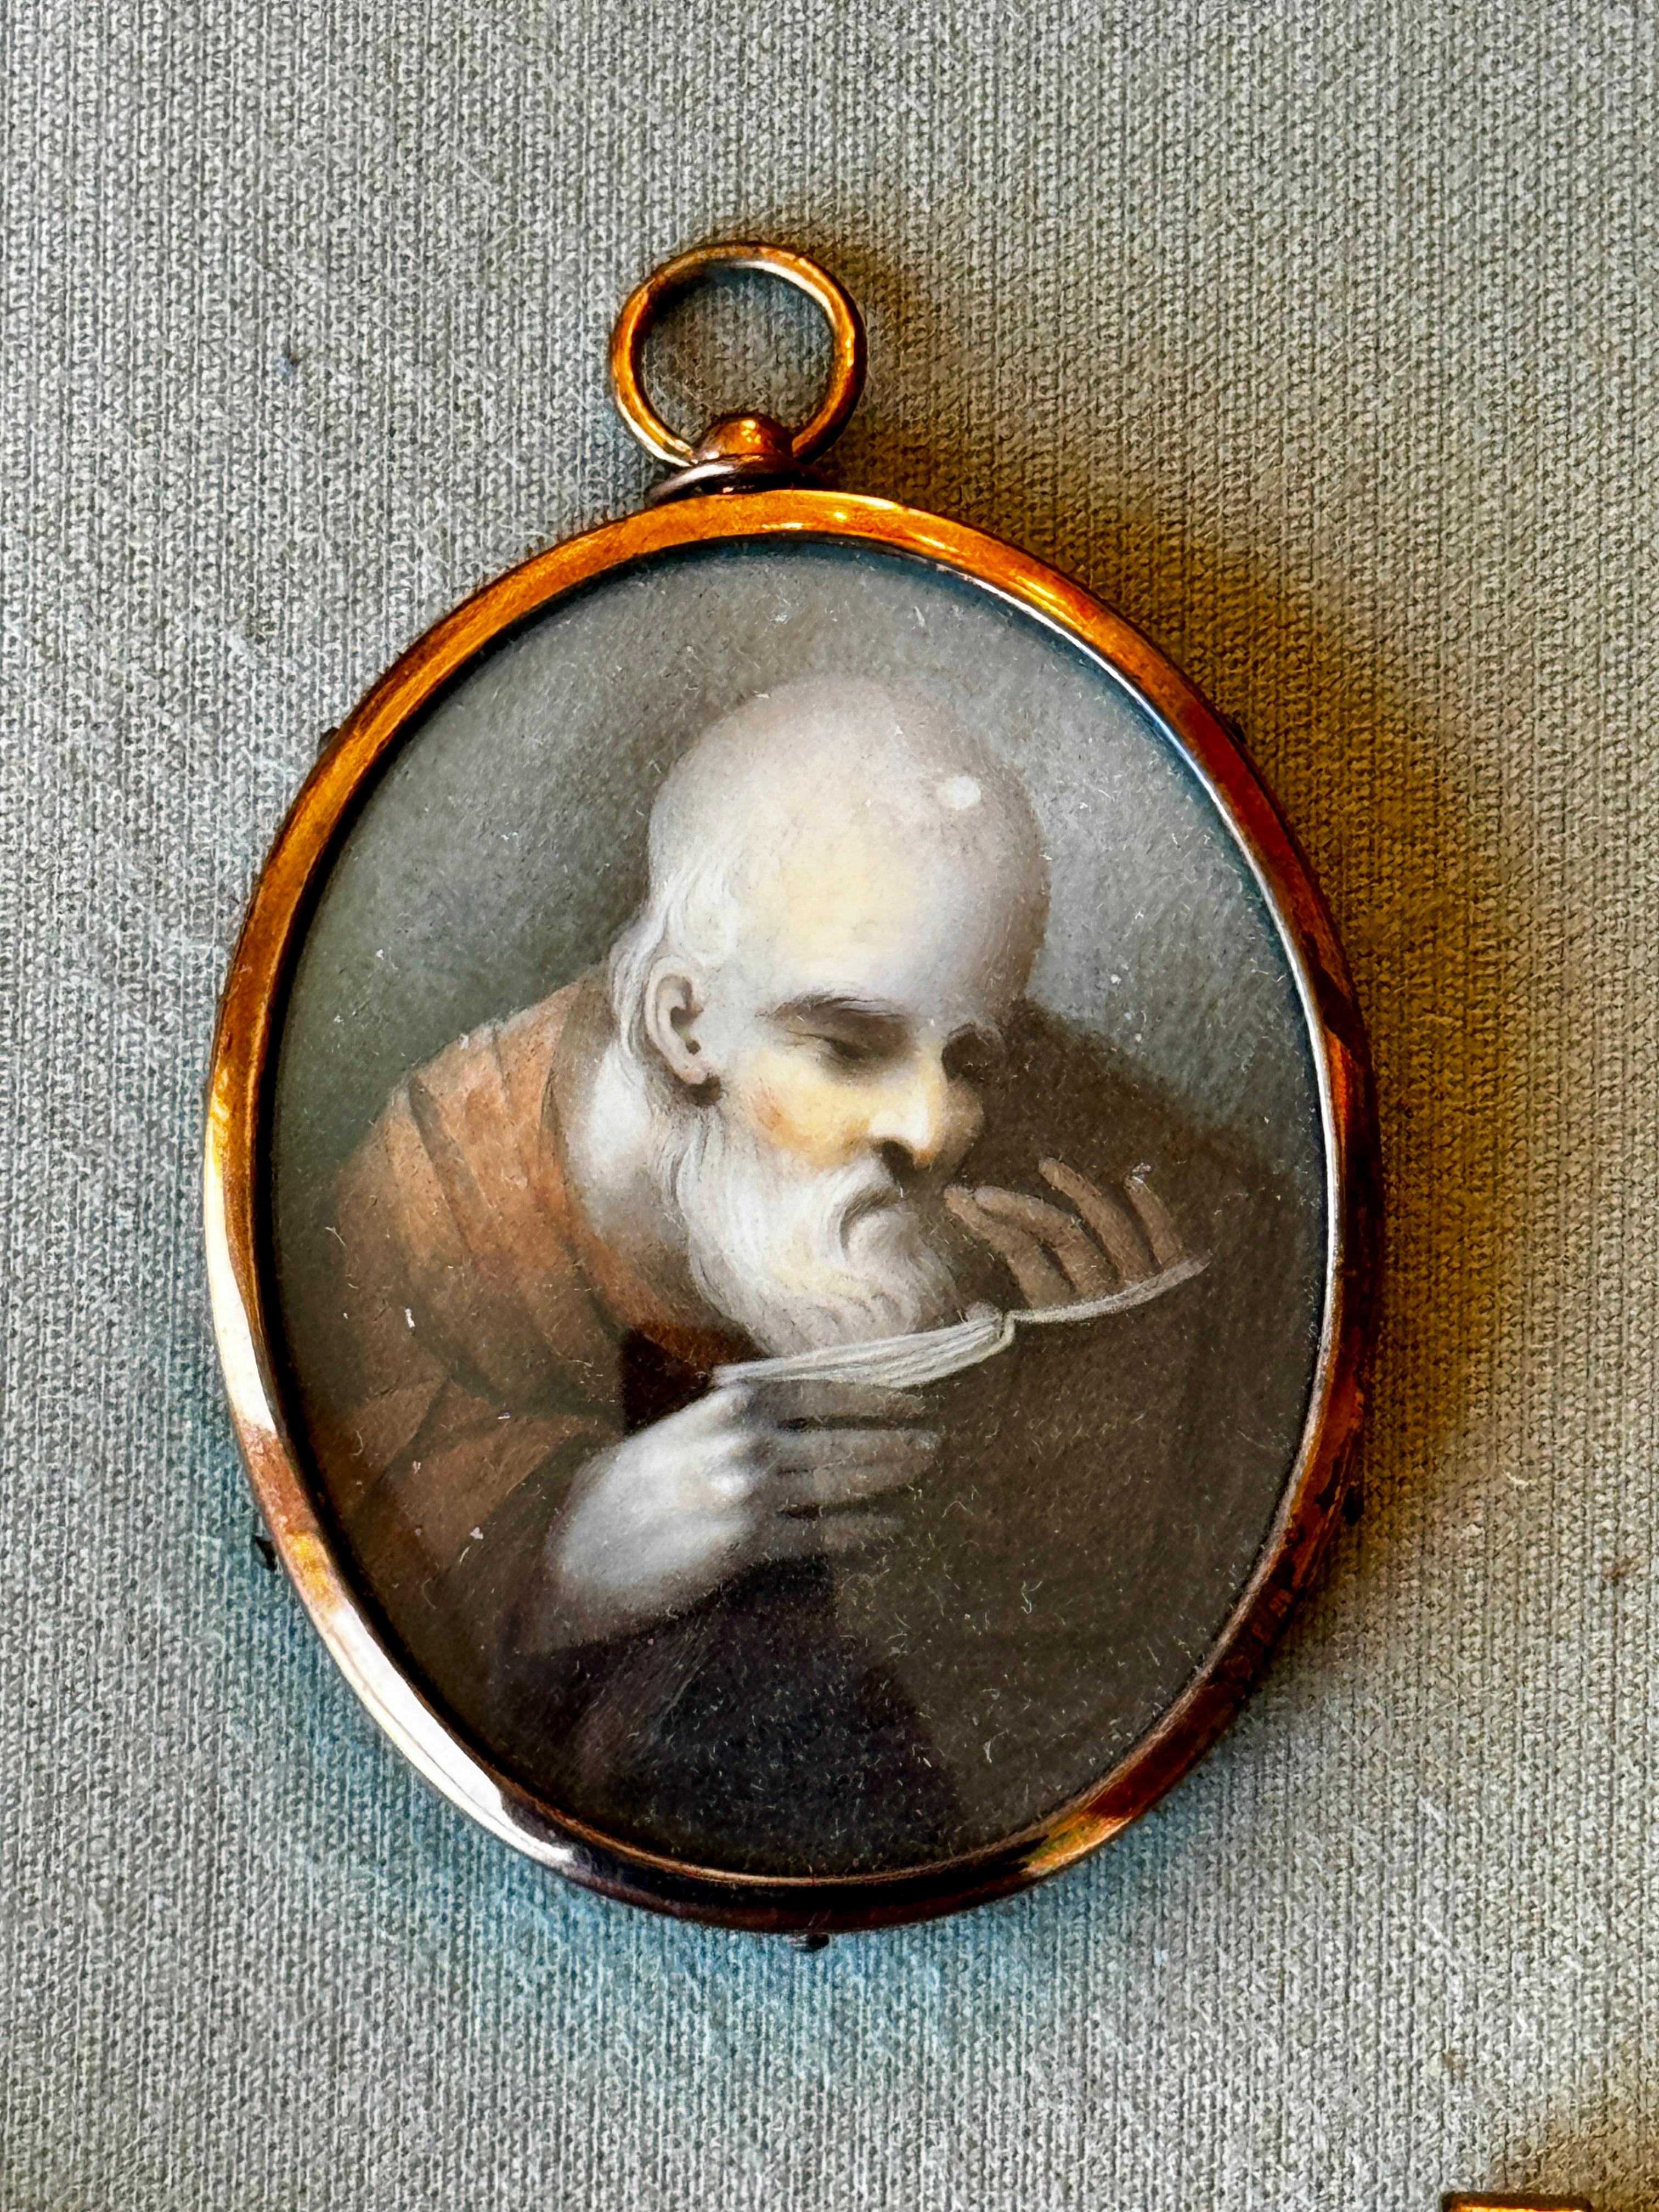 Framed 19th Century Porcelain Miniatures of Monks Hand-Painted

Frame 9.75